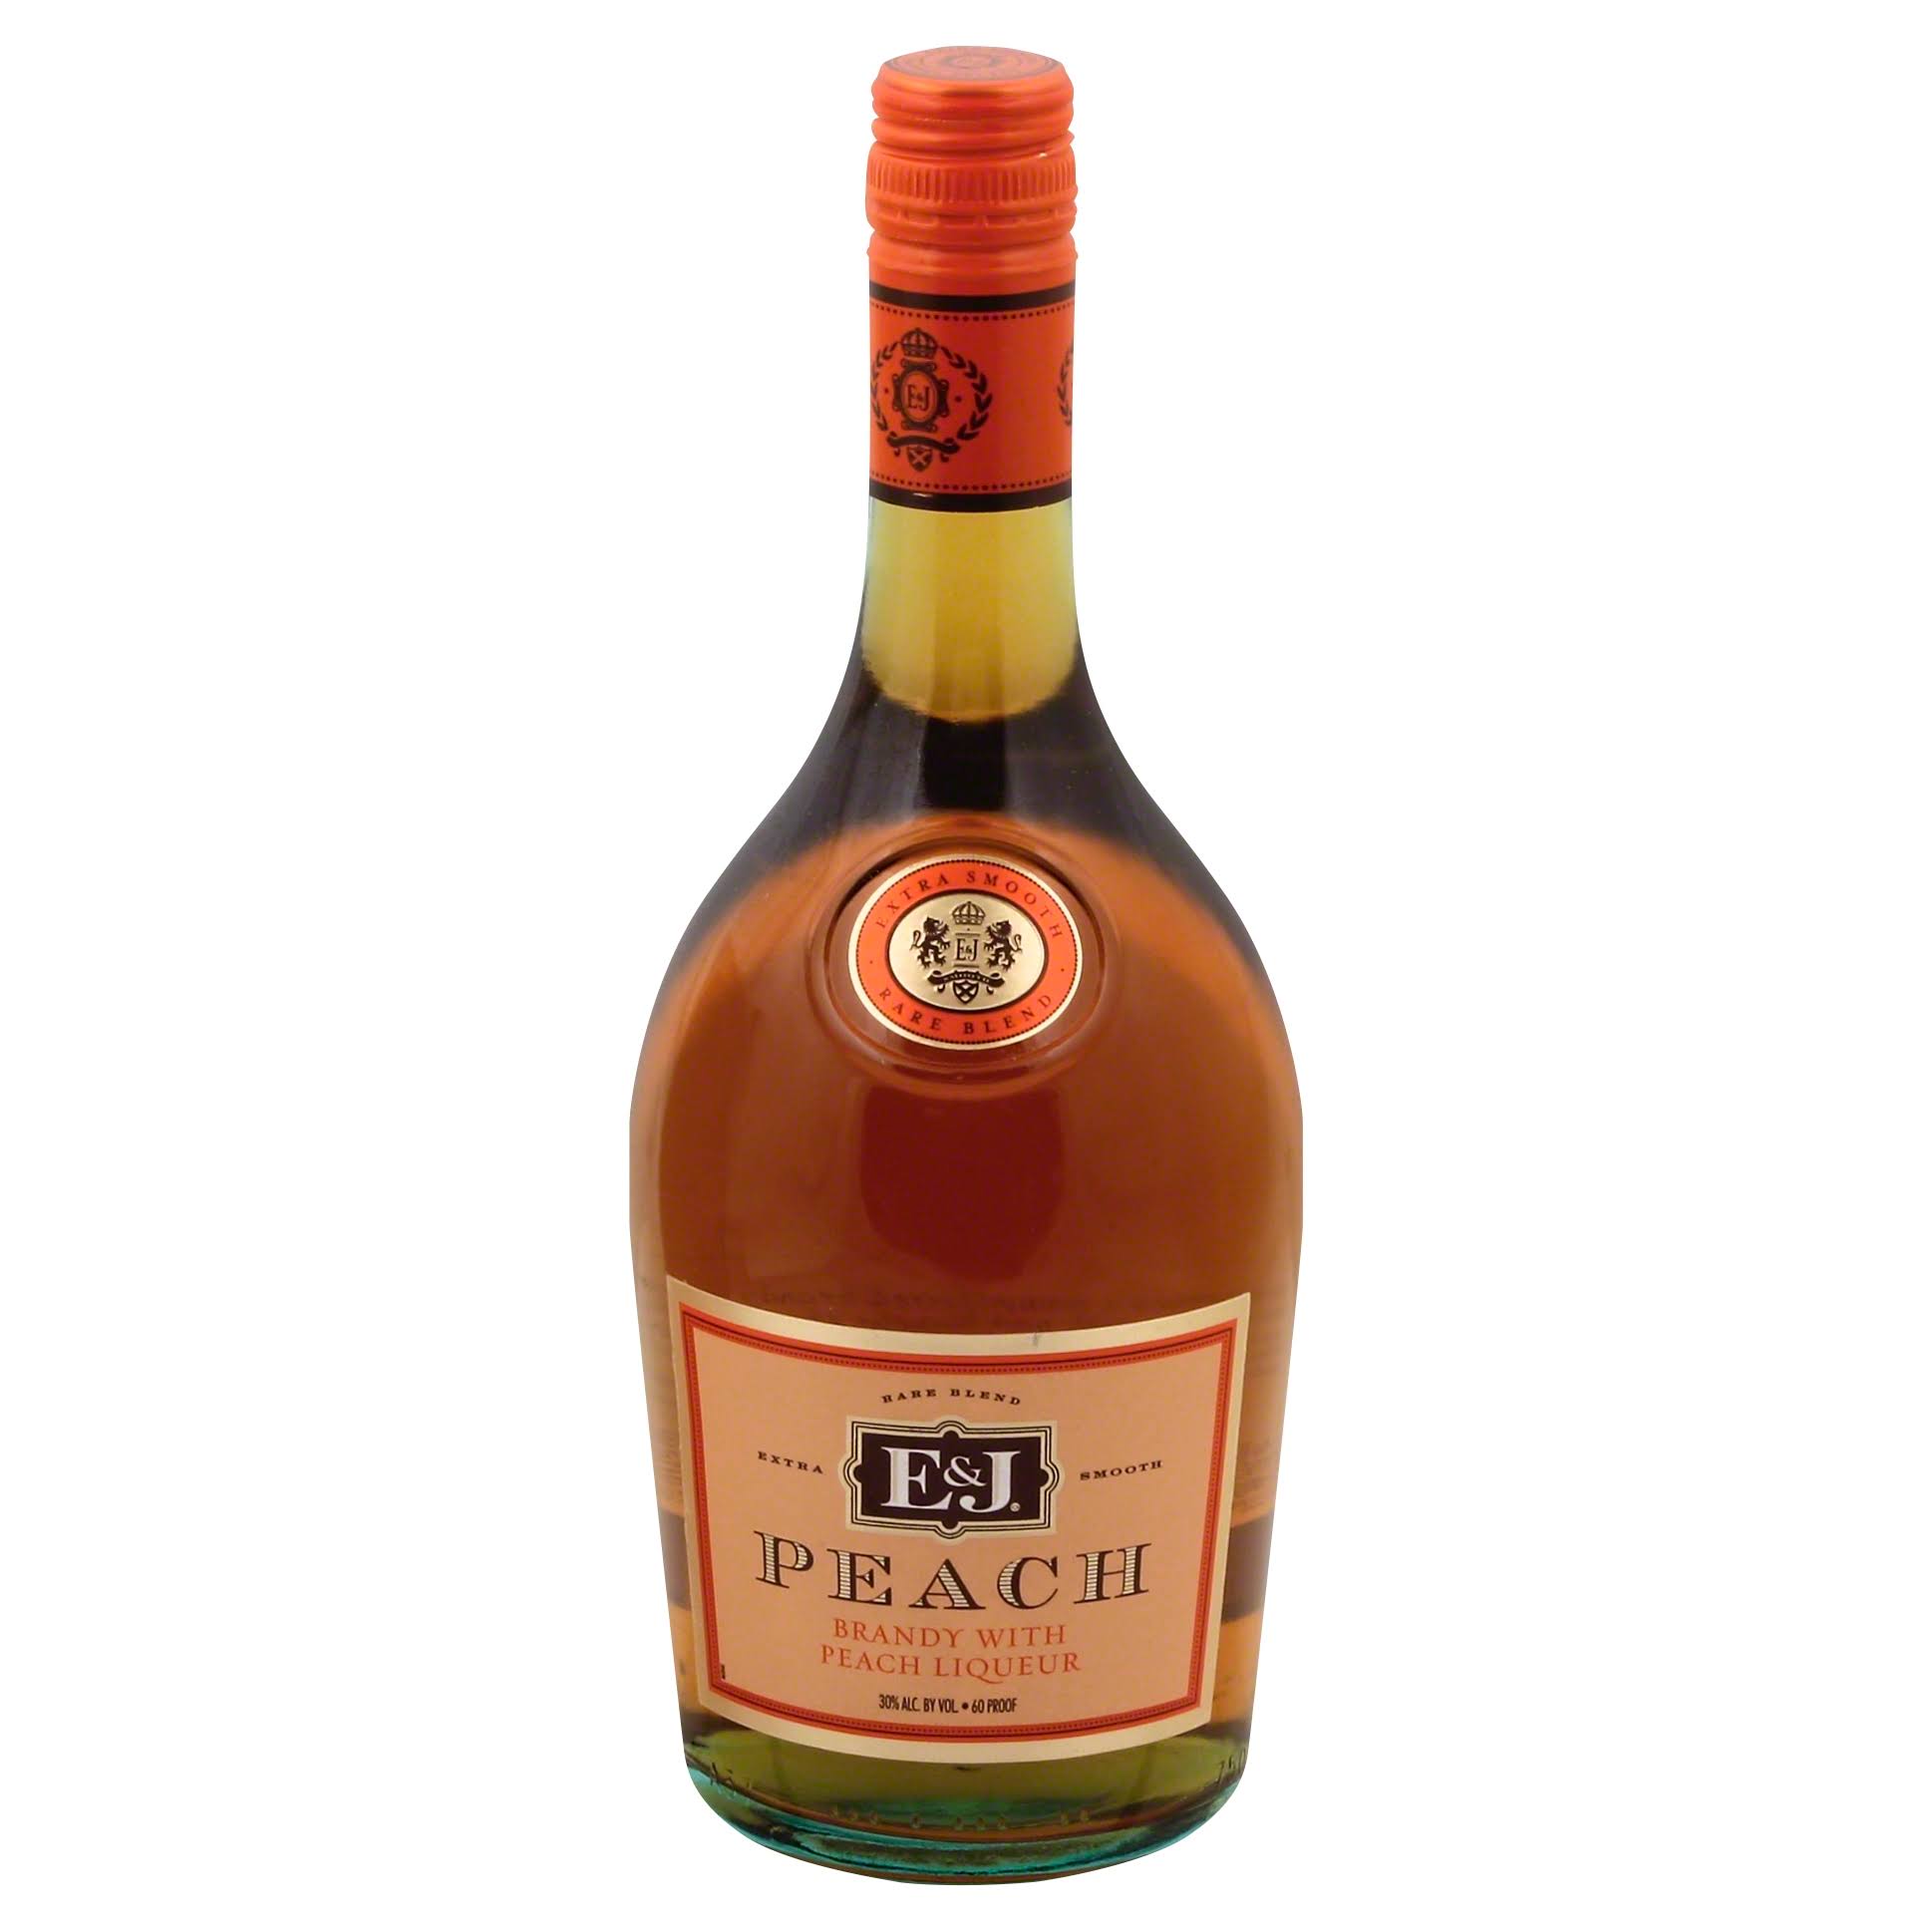 E & J Peach Brandy - 750 ml bottle